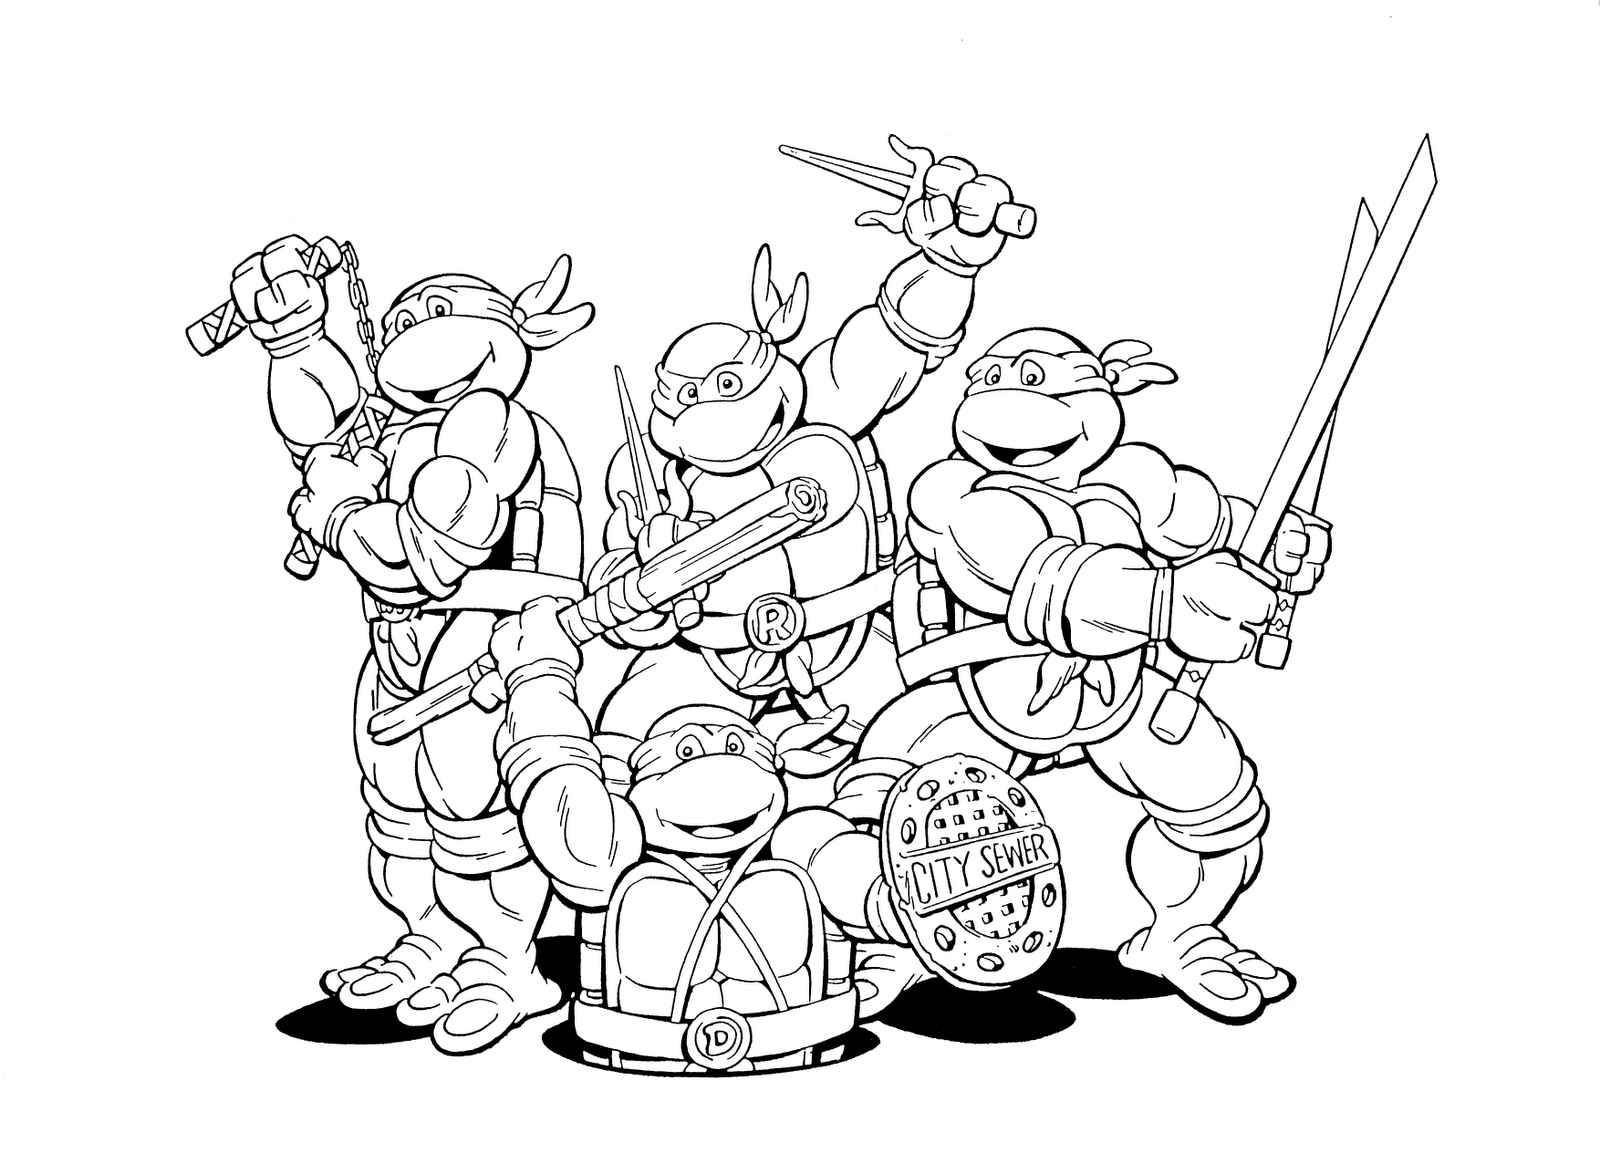 Boys Kids Coloring Pages Ninja Turtles
 Teenage Mutant Ninja Turtles Coloring Pages Printable